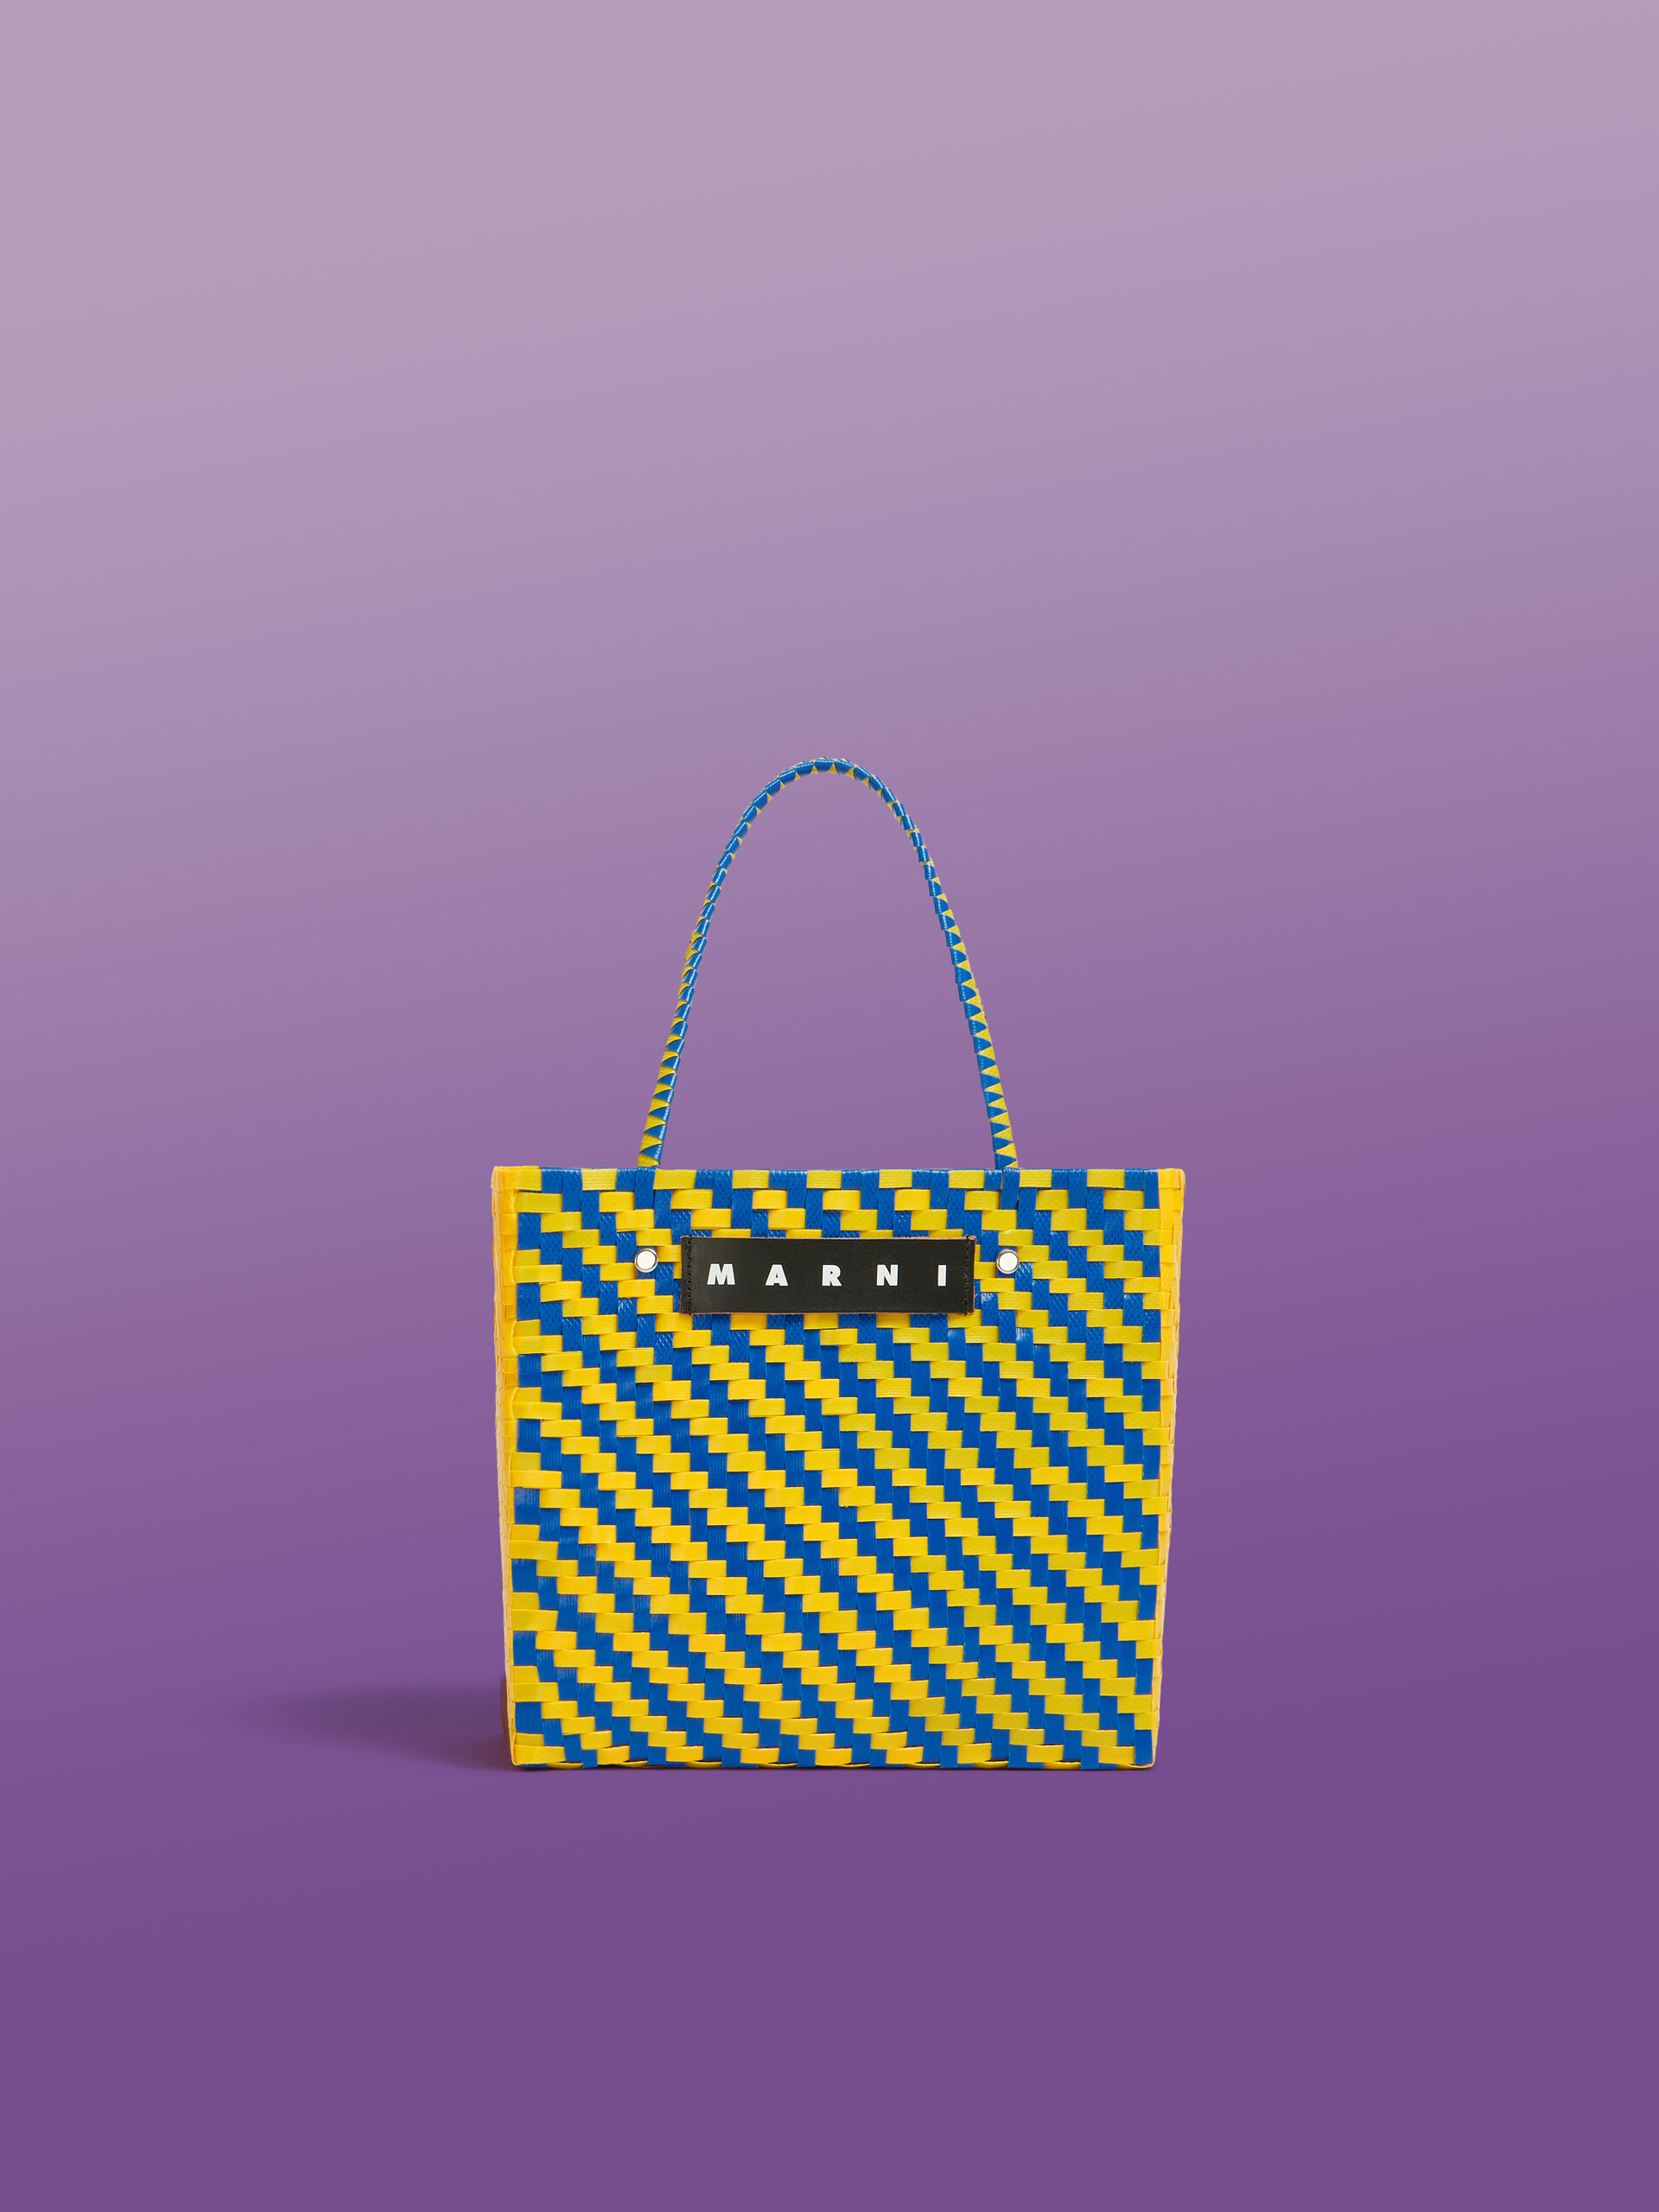 Sac Marni Market Mini Basket bleu et jaune avec motif en zigzag - Sacs cabas - Image 1